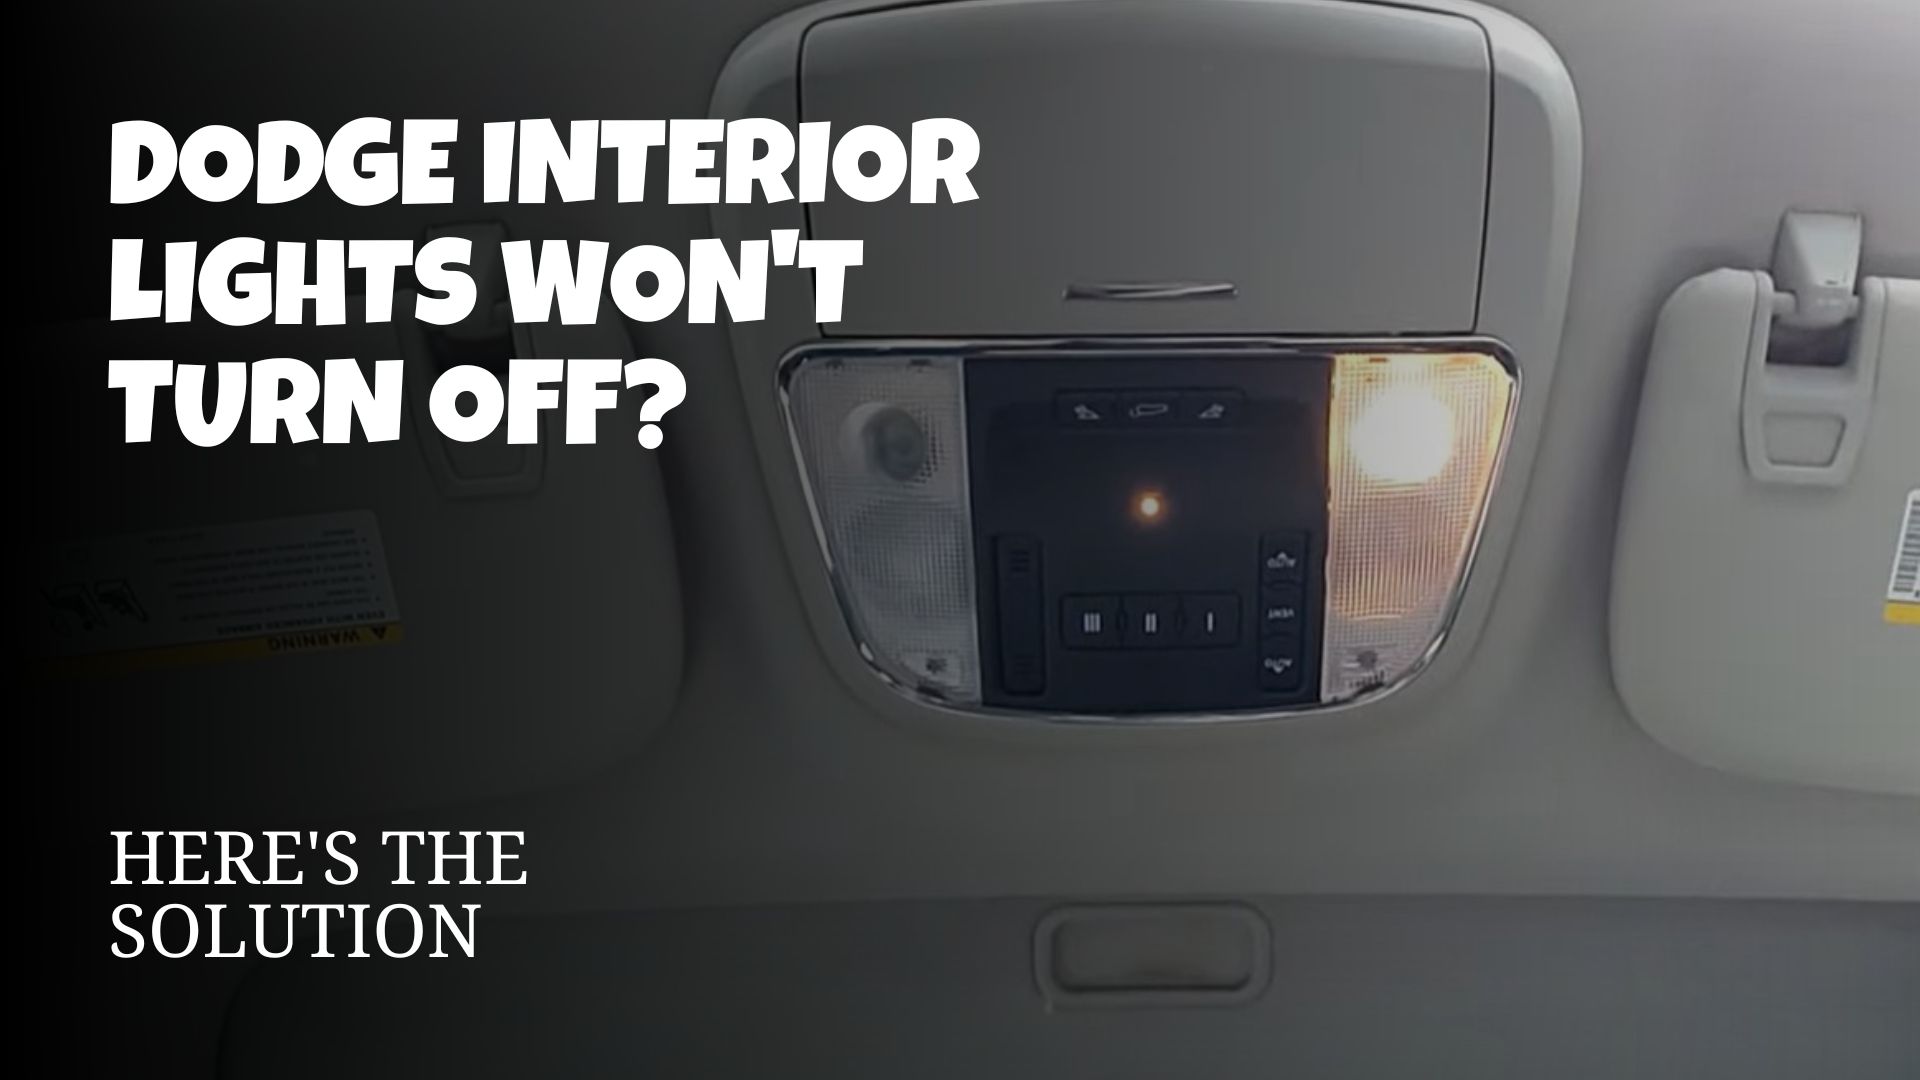 2009 dodge journey interior lights won't turn on